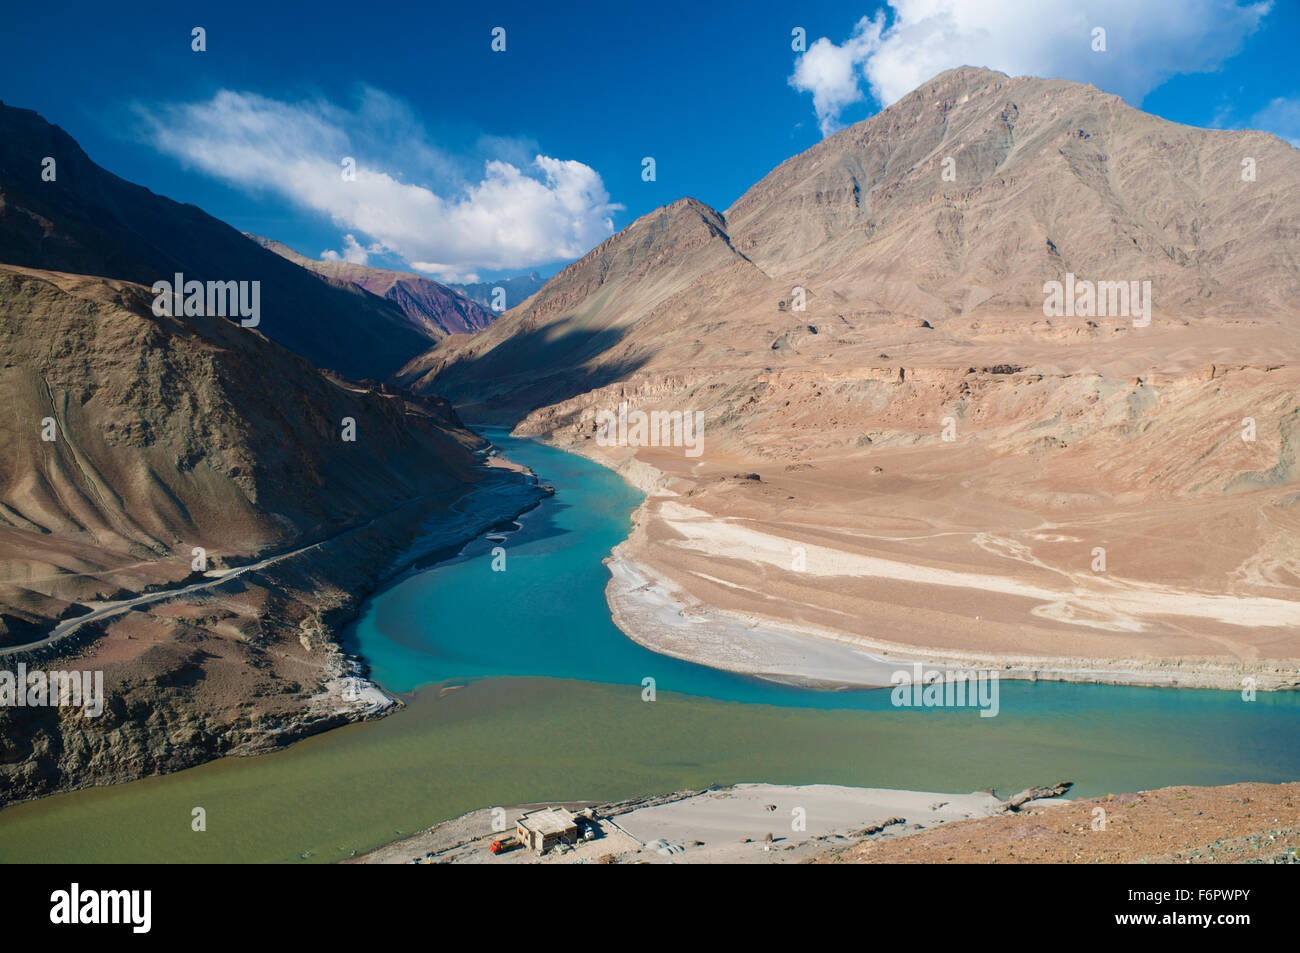 Confluence of Zanskar and Indus rivers - Leh, Ladakh, India Stock Photo